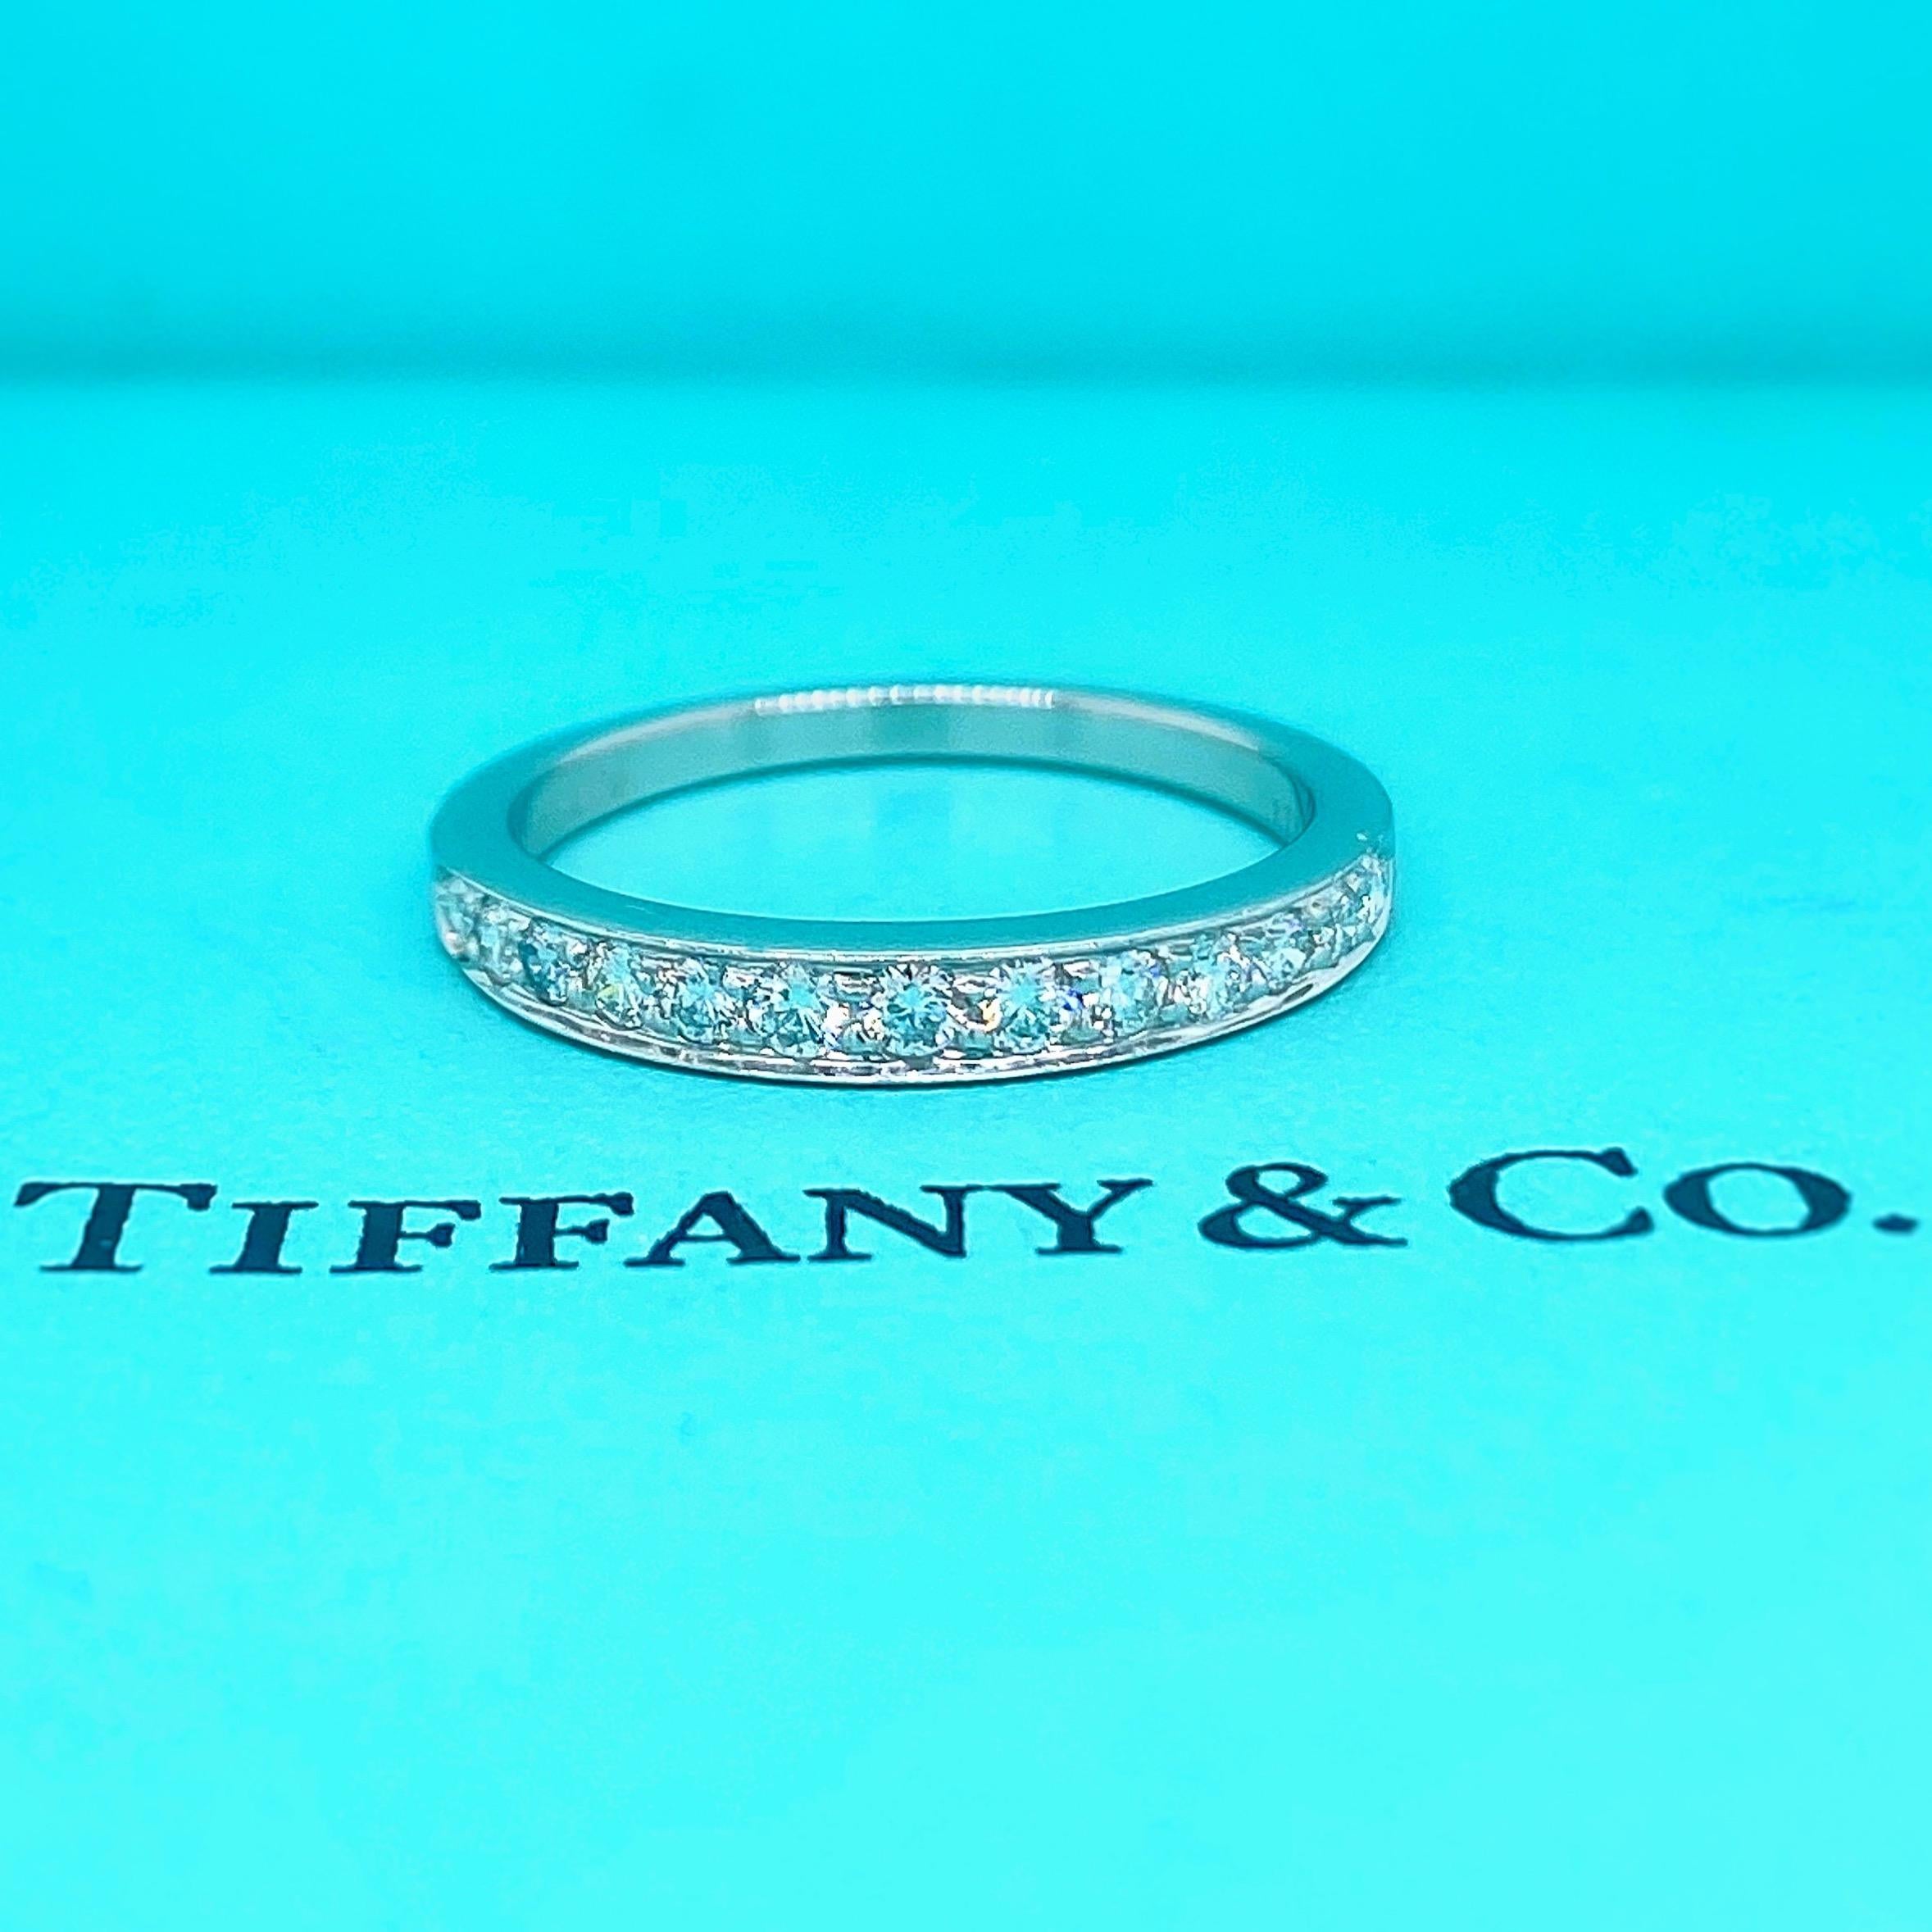 Tiffany & Co. Diamond Wedding Band Ring
Style:  Half-Circle Bead Set 
Metal:  Platinum PT950
Size:  5.25 - sizable
Measurements:  2.75 MM
TCW:  0.27 tcw
Main Diamond:  13 Round Brilliant Diamonds
Color & Clarity:  F - G / VS1
Hallmark:  ©TIFFANY&CO.